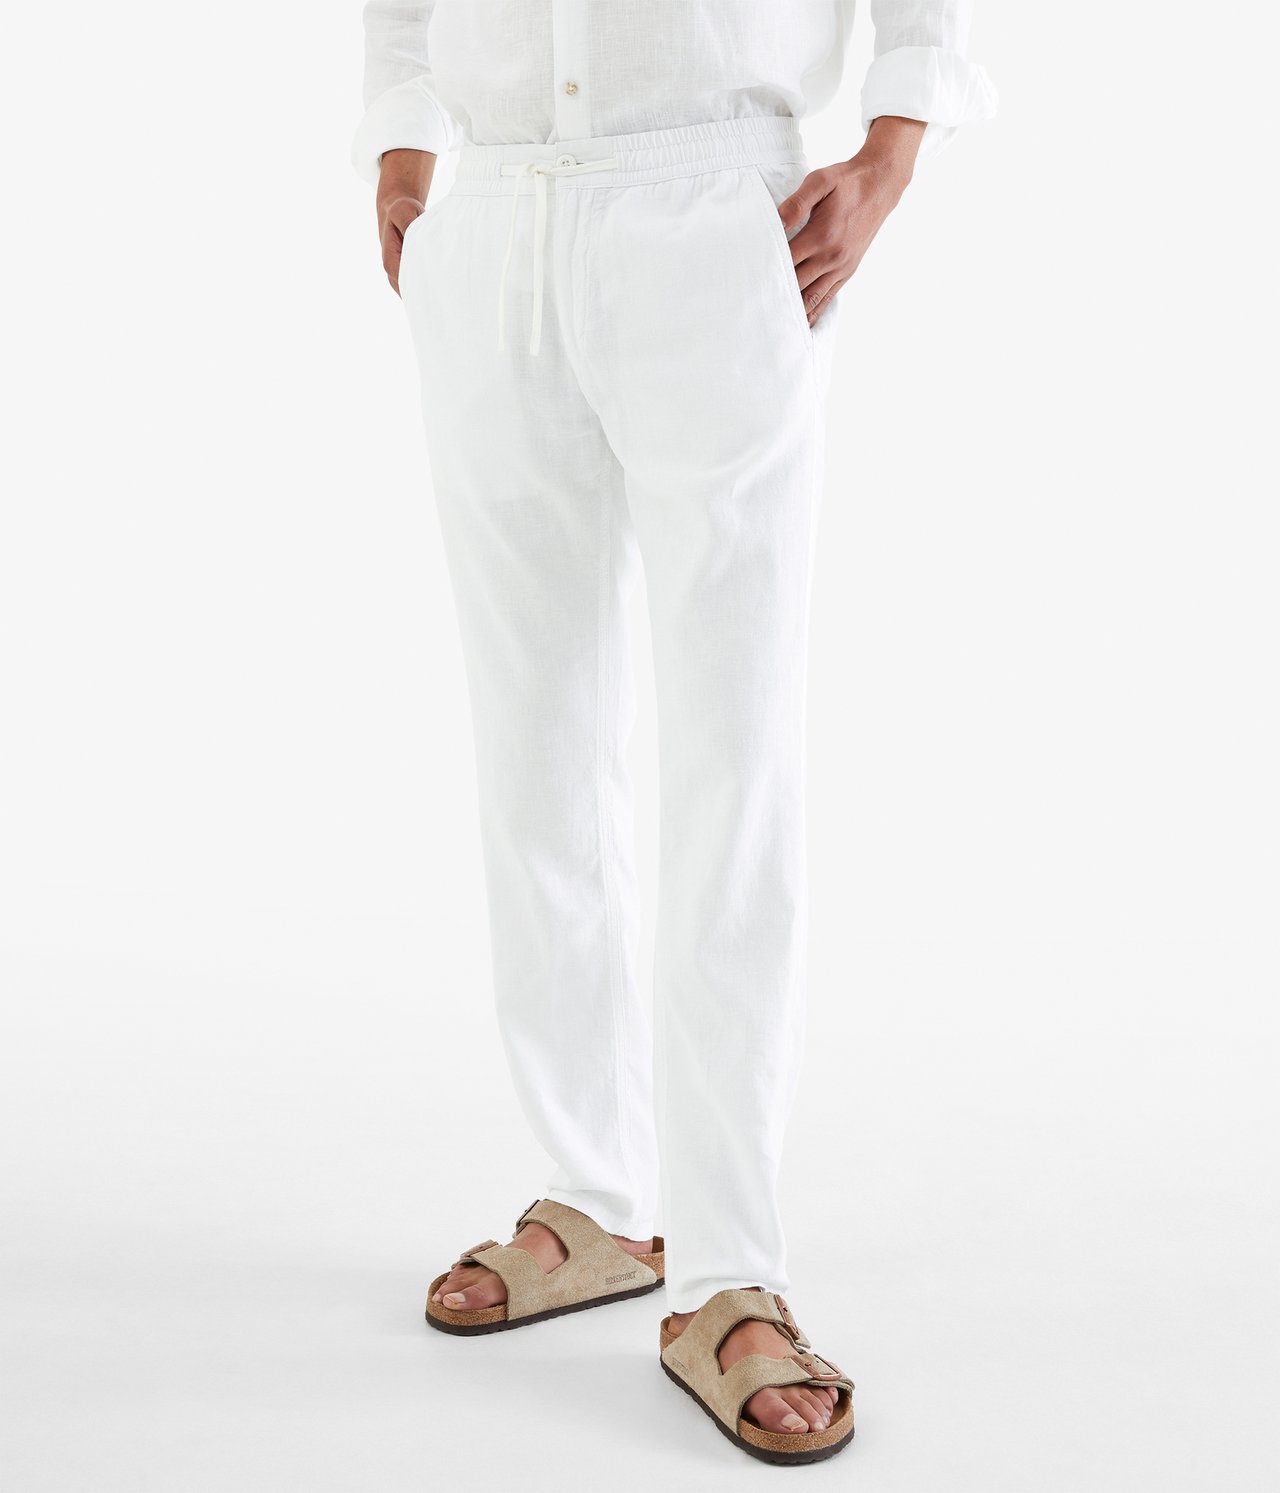 Bukse i linblanding - Hvit - 189cm / Storlek: M - 2